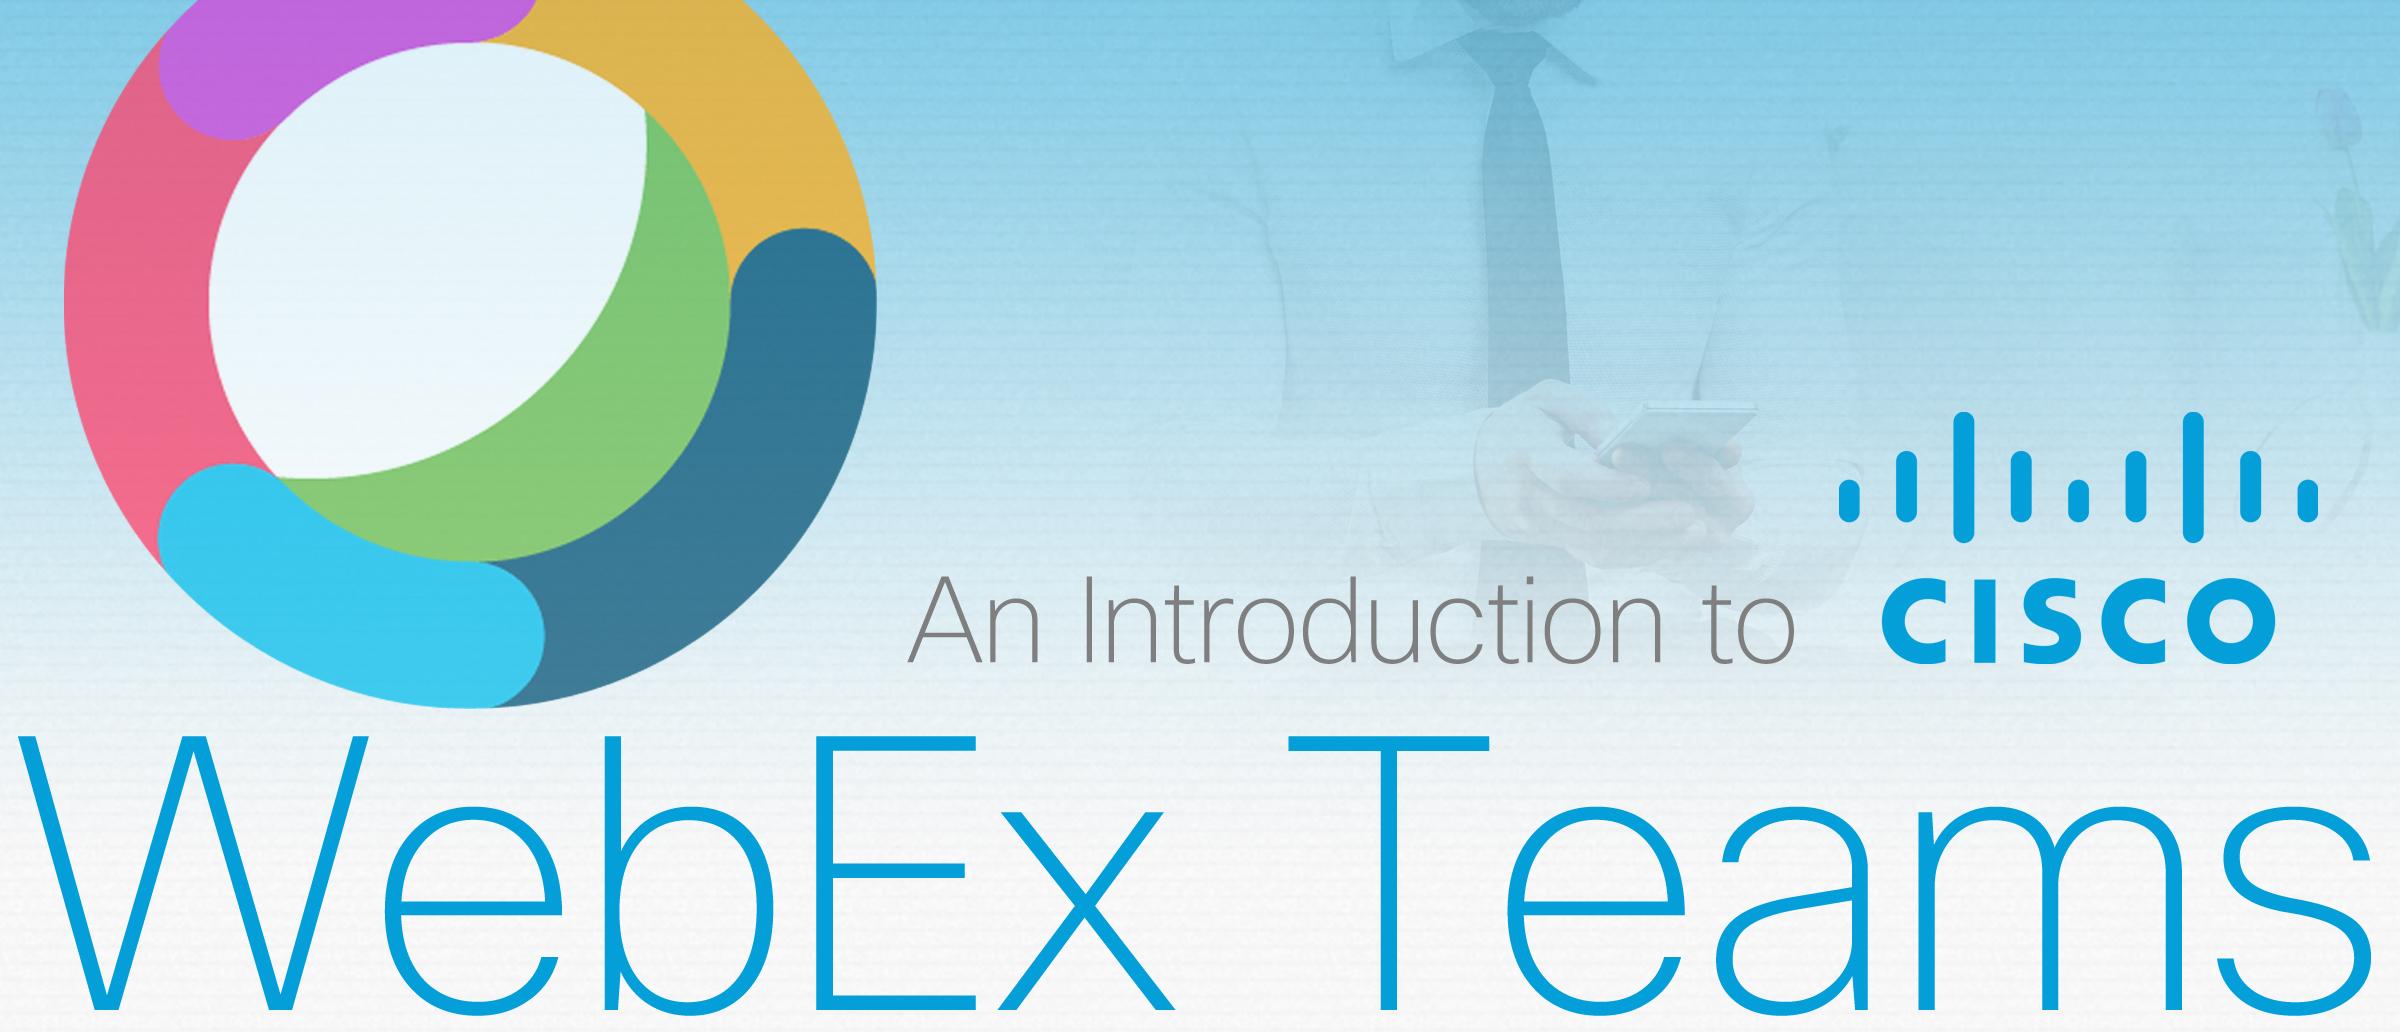 WebEx Team's Logo - Webex Teams Introduction to Webex Teams